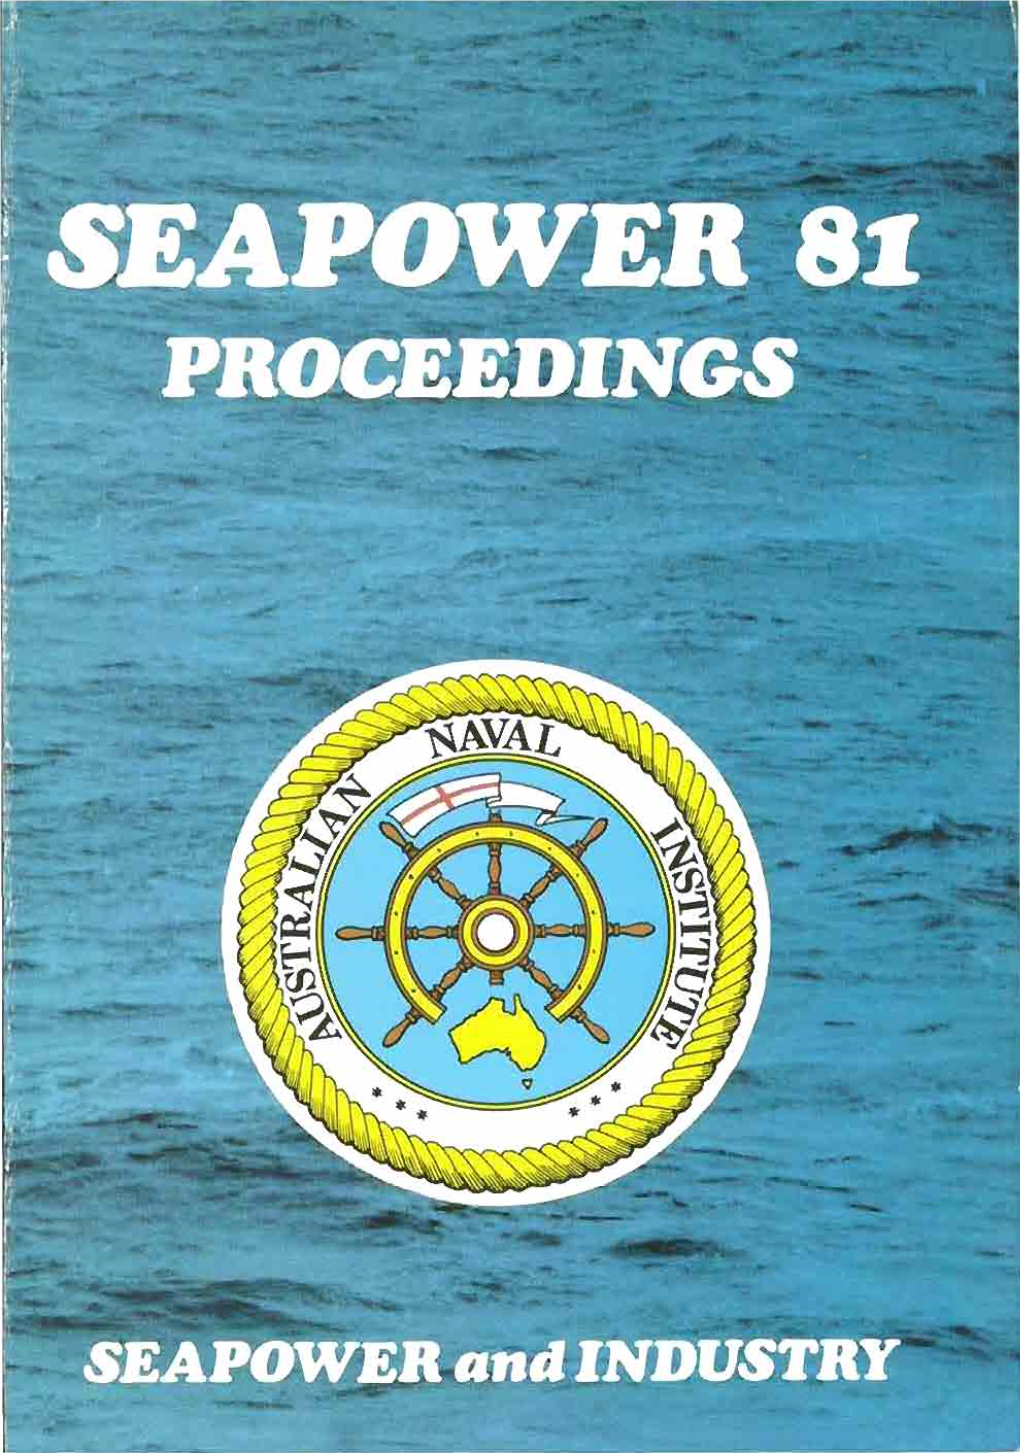 Headmark 024A (Seapower)